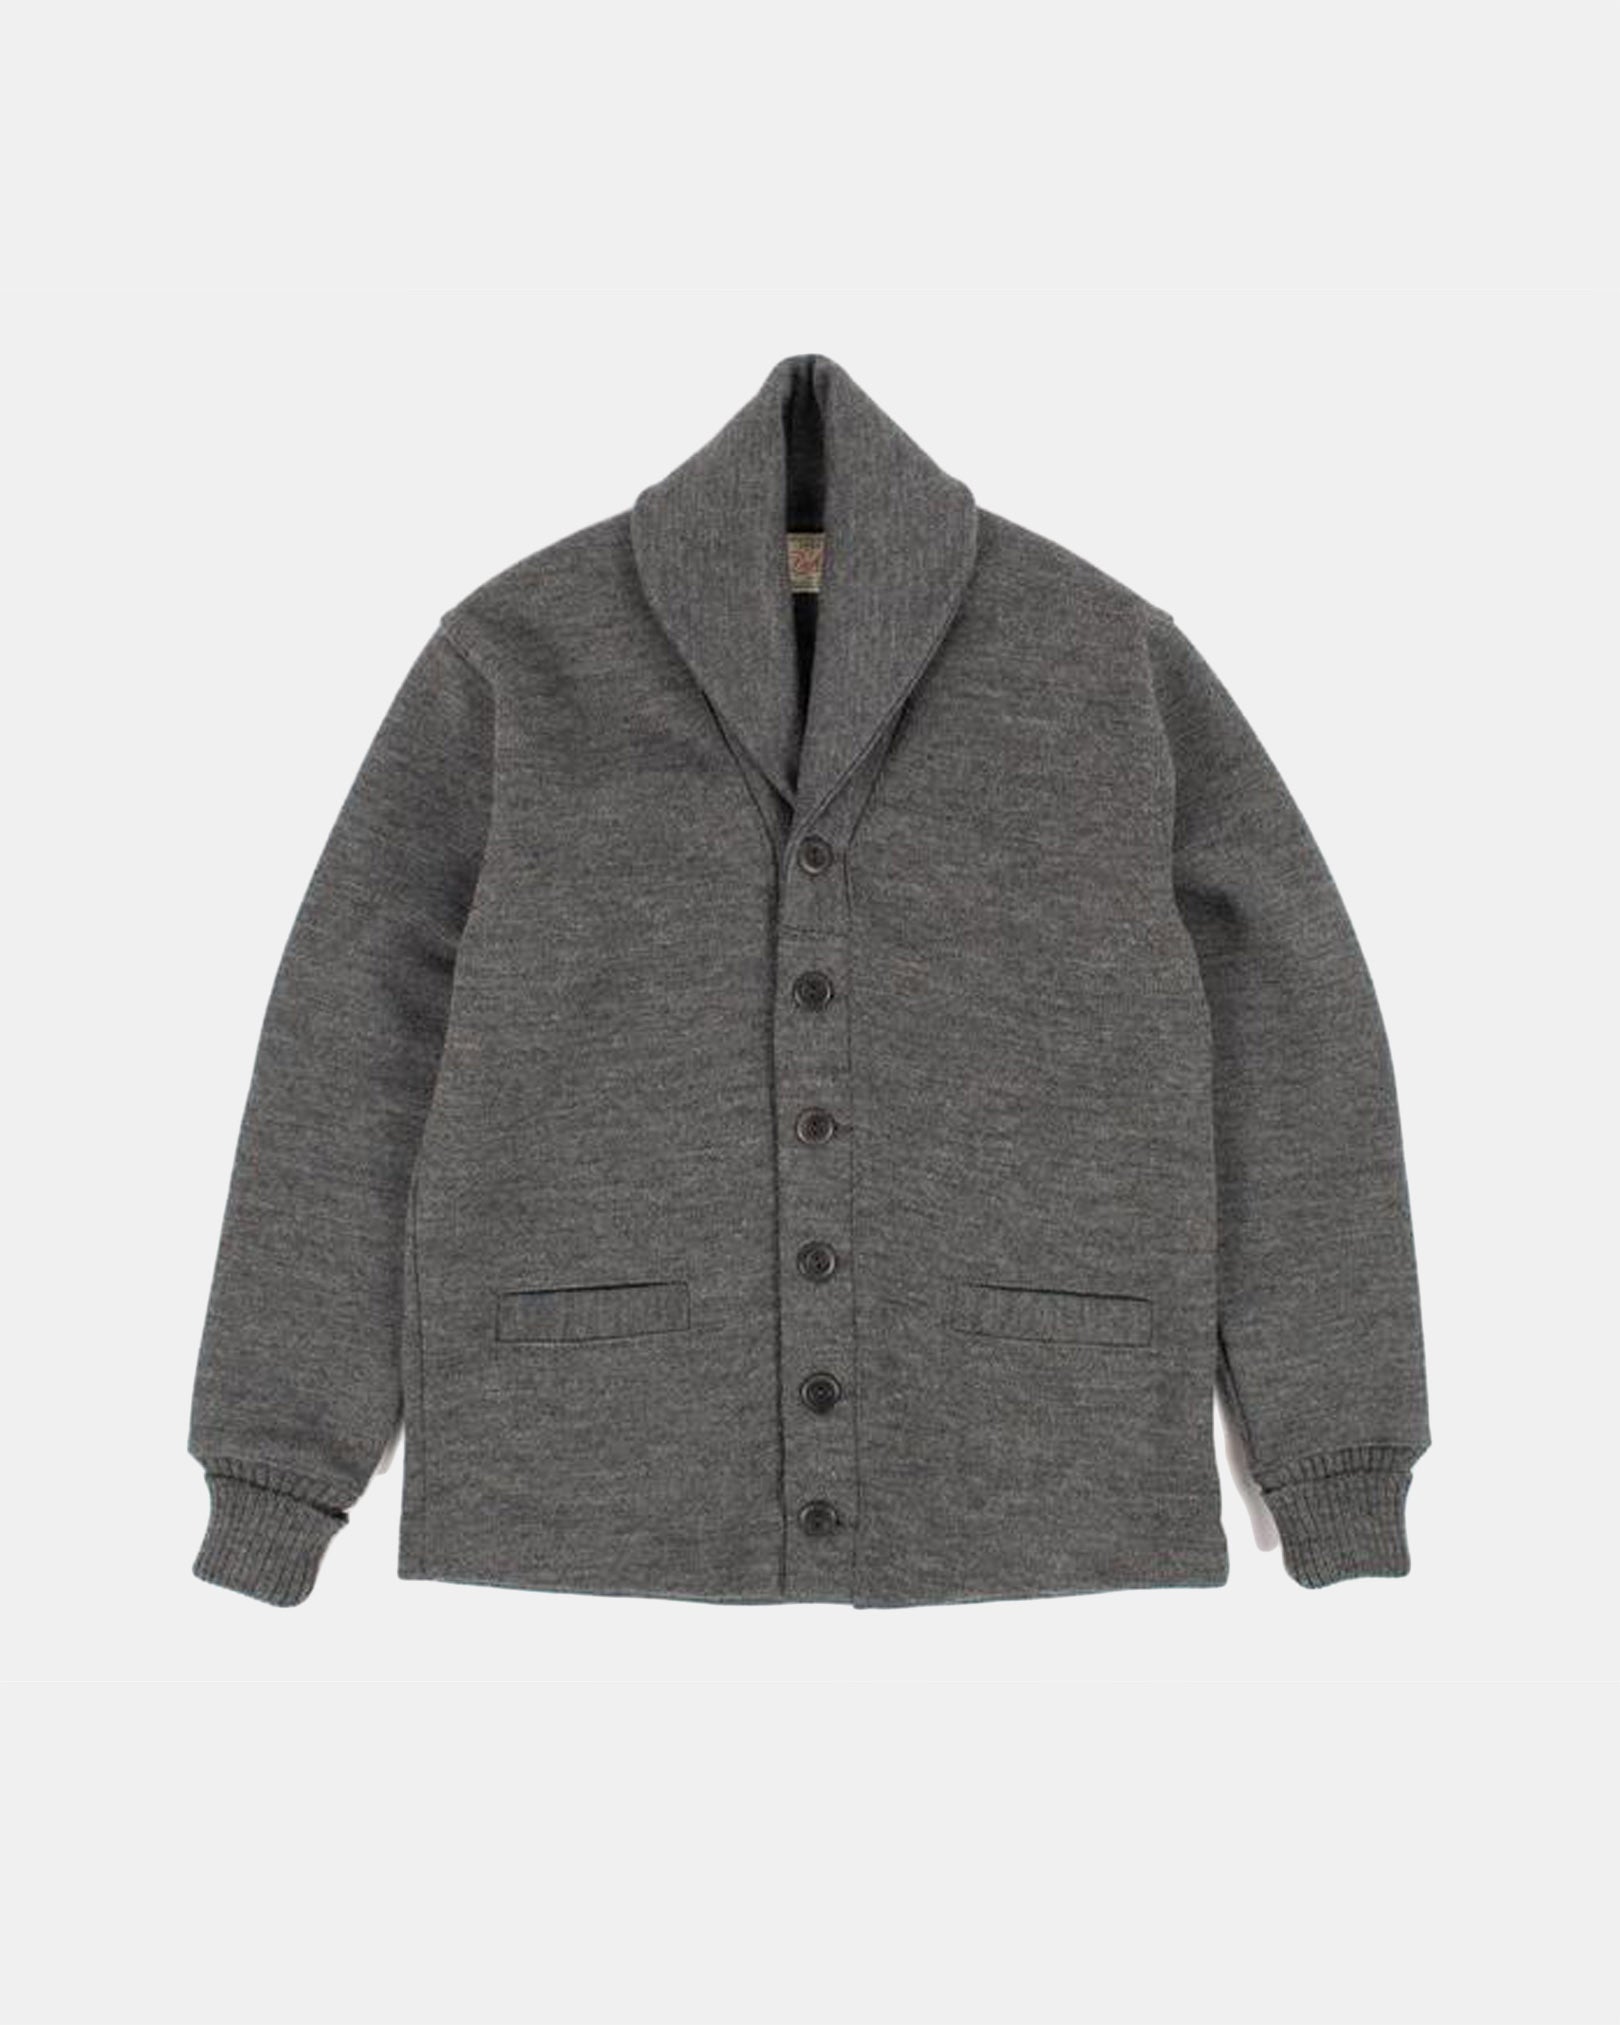 Shawl Sweater Coat Charcoal